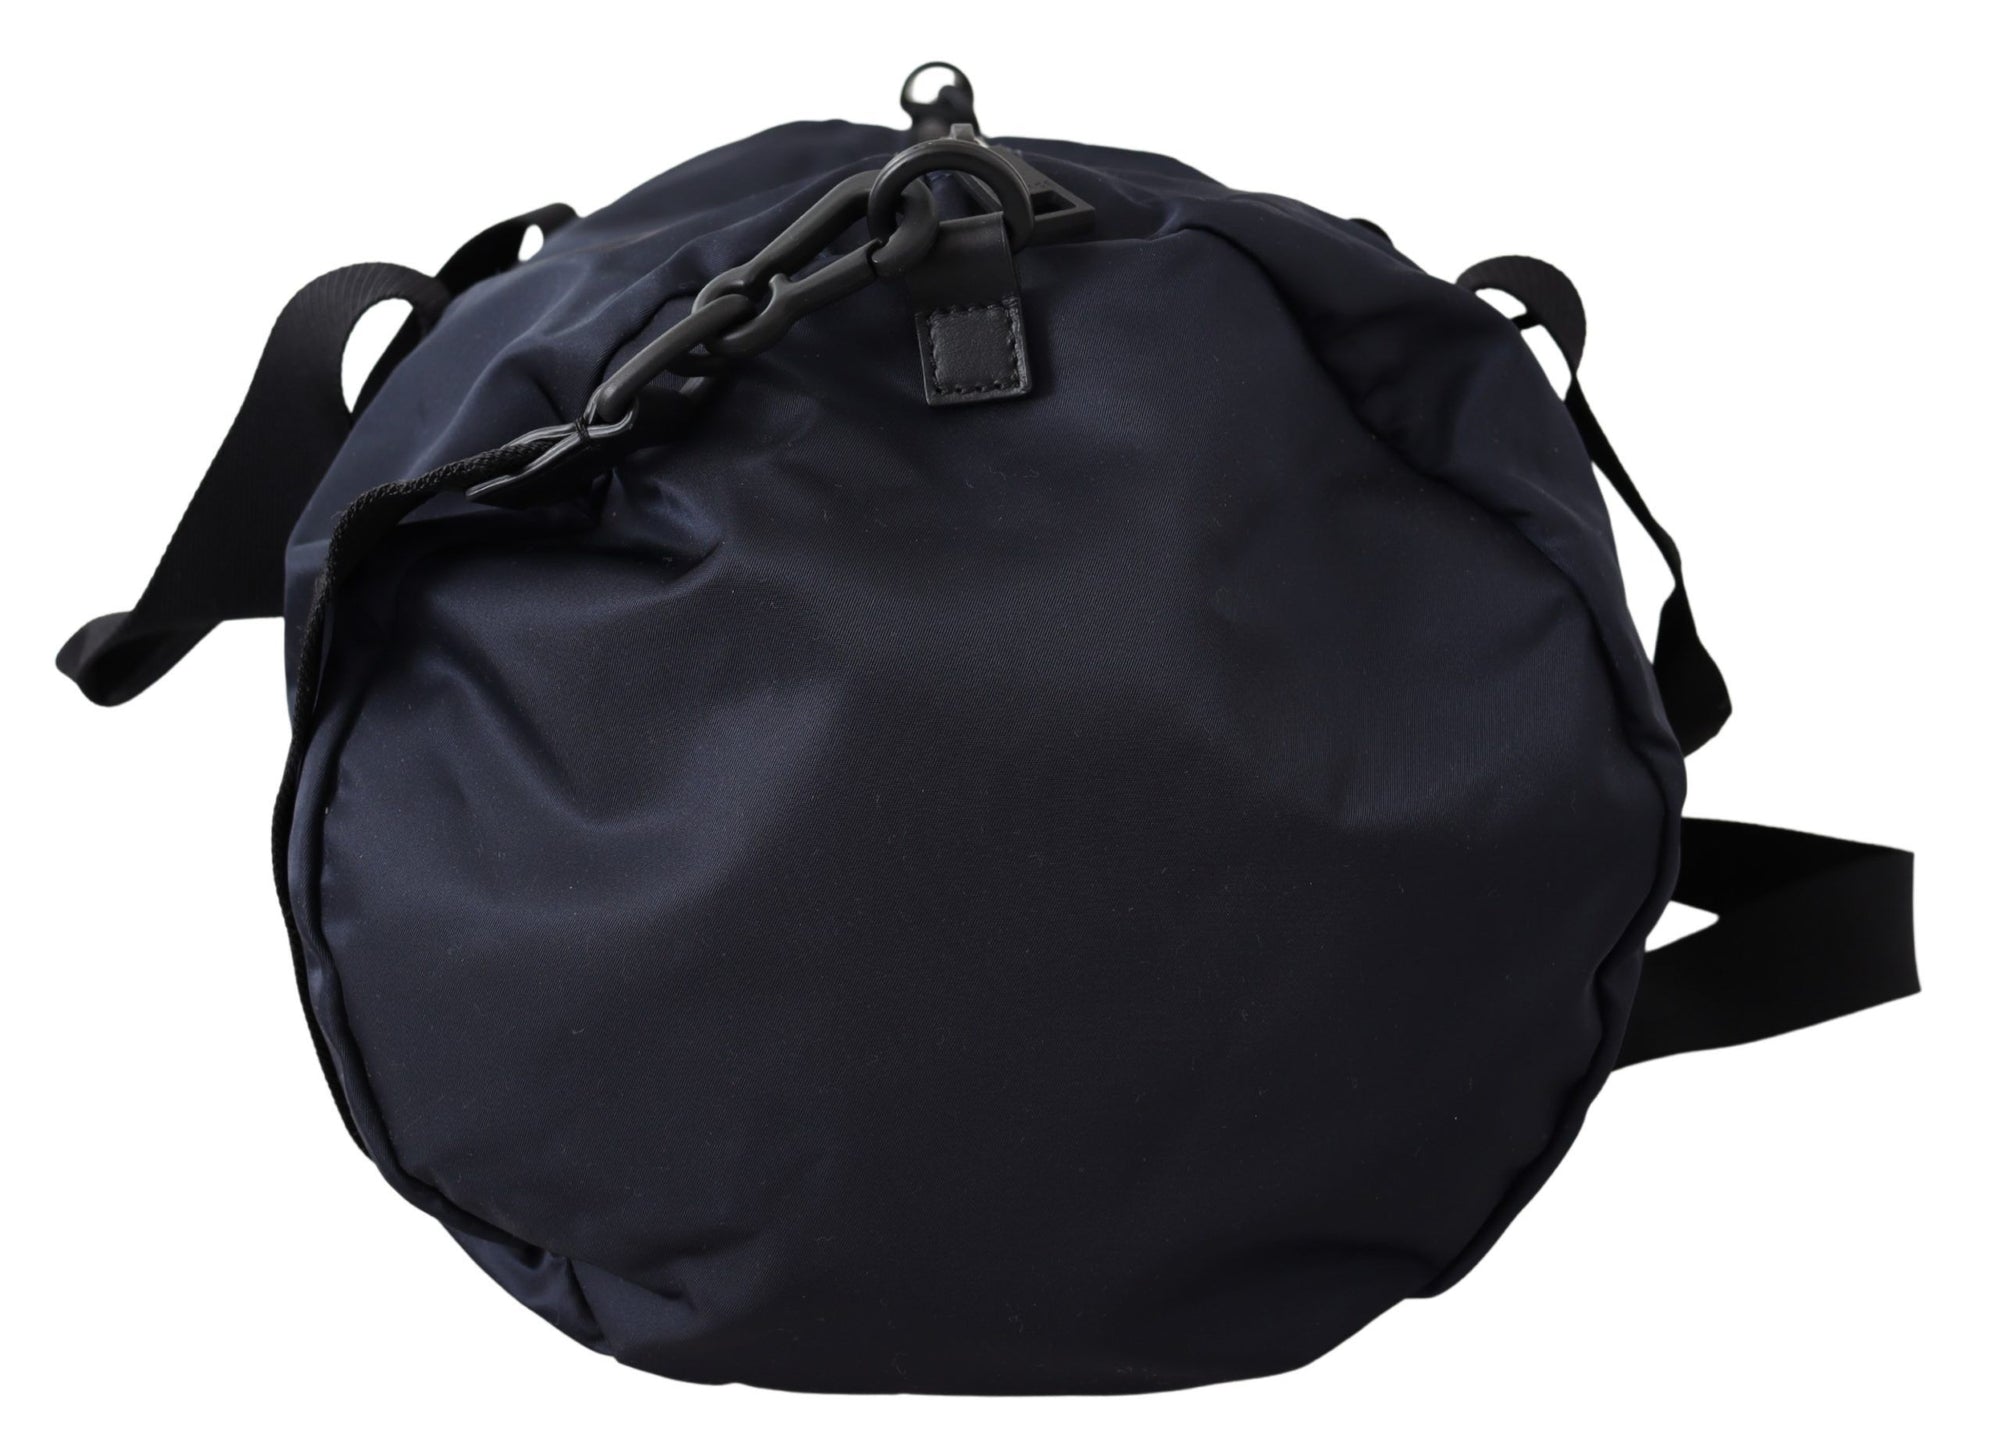 Elegant Blue Nylon Travel Bag with Leather Details